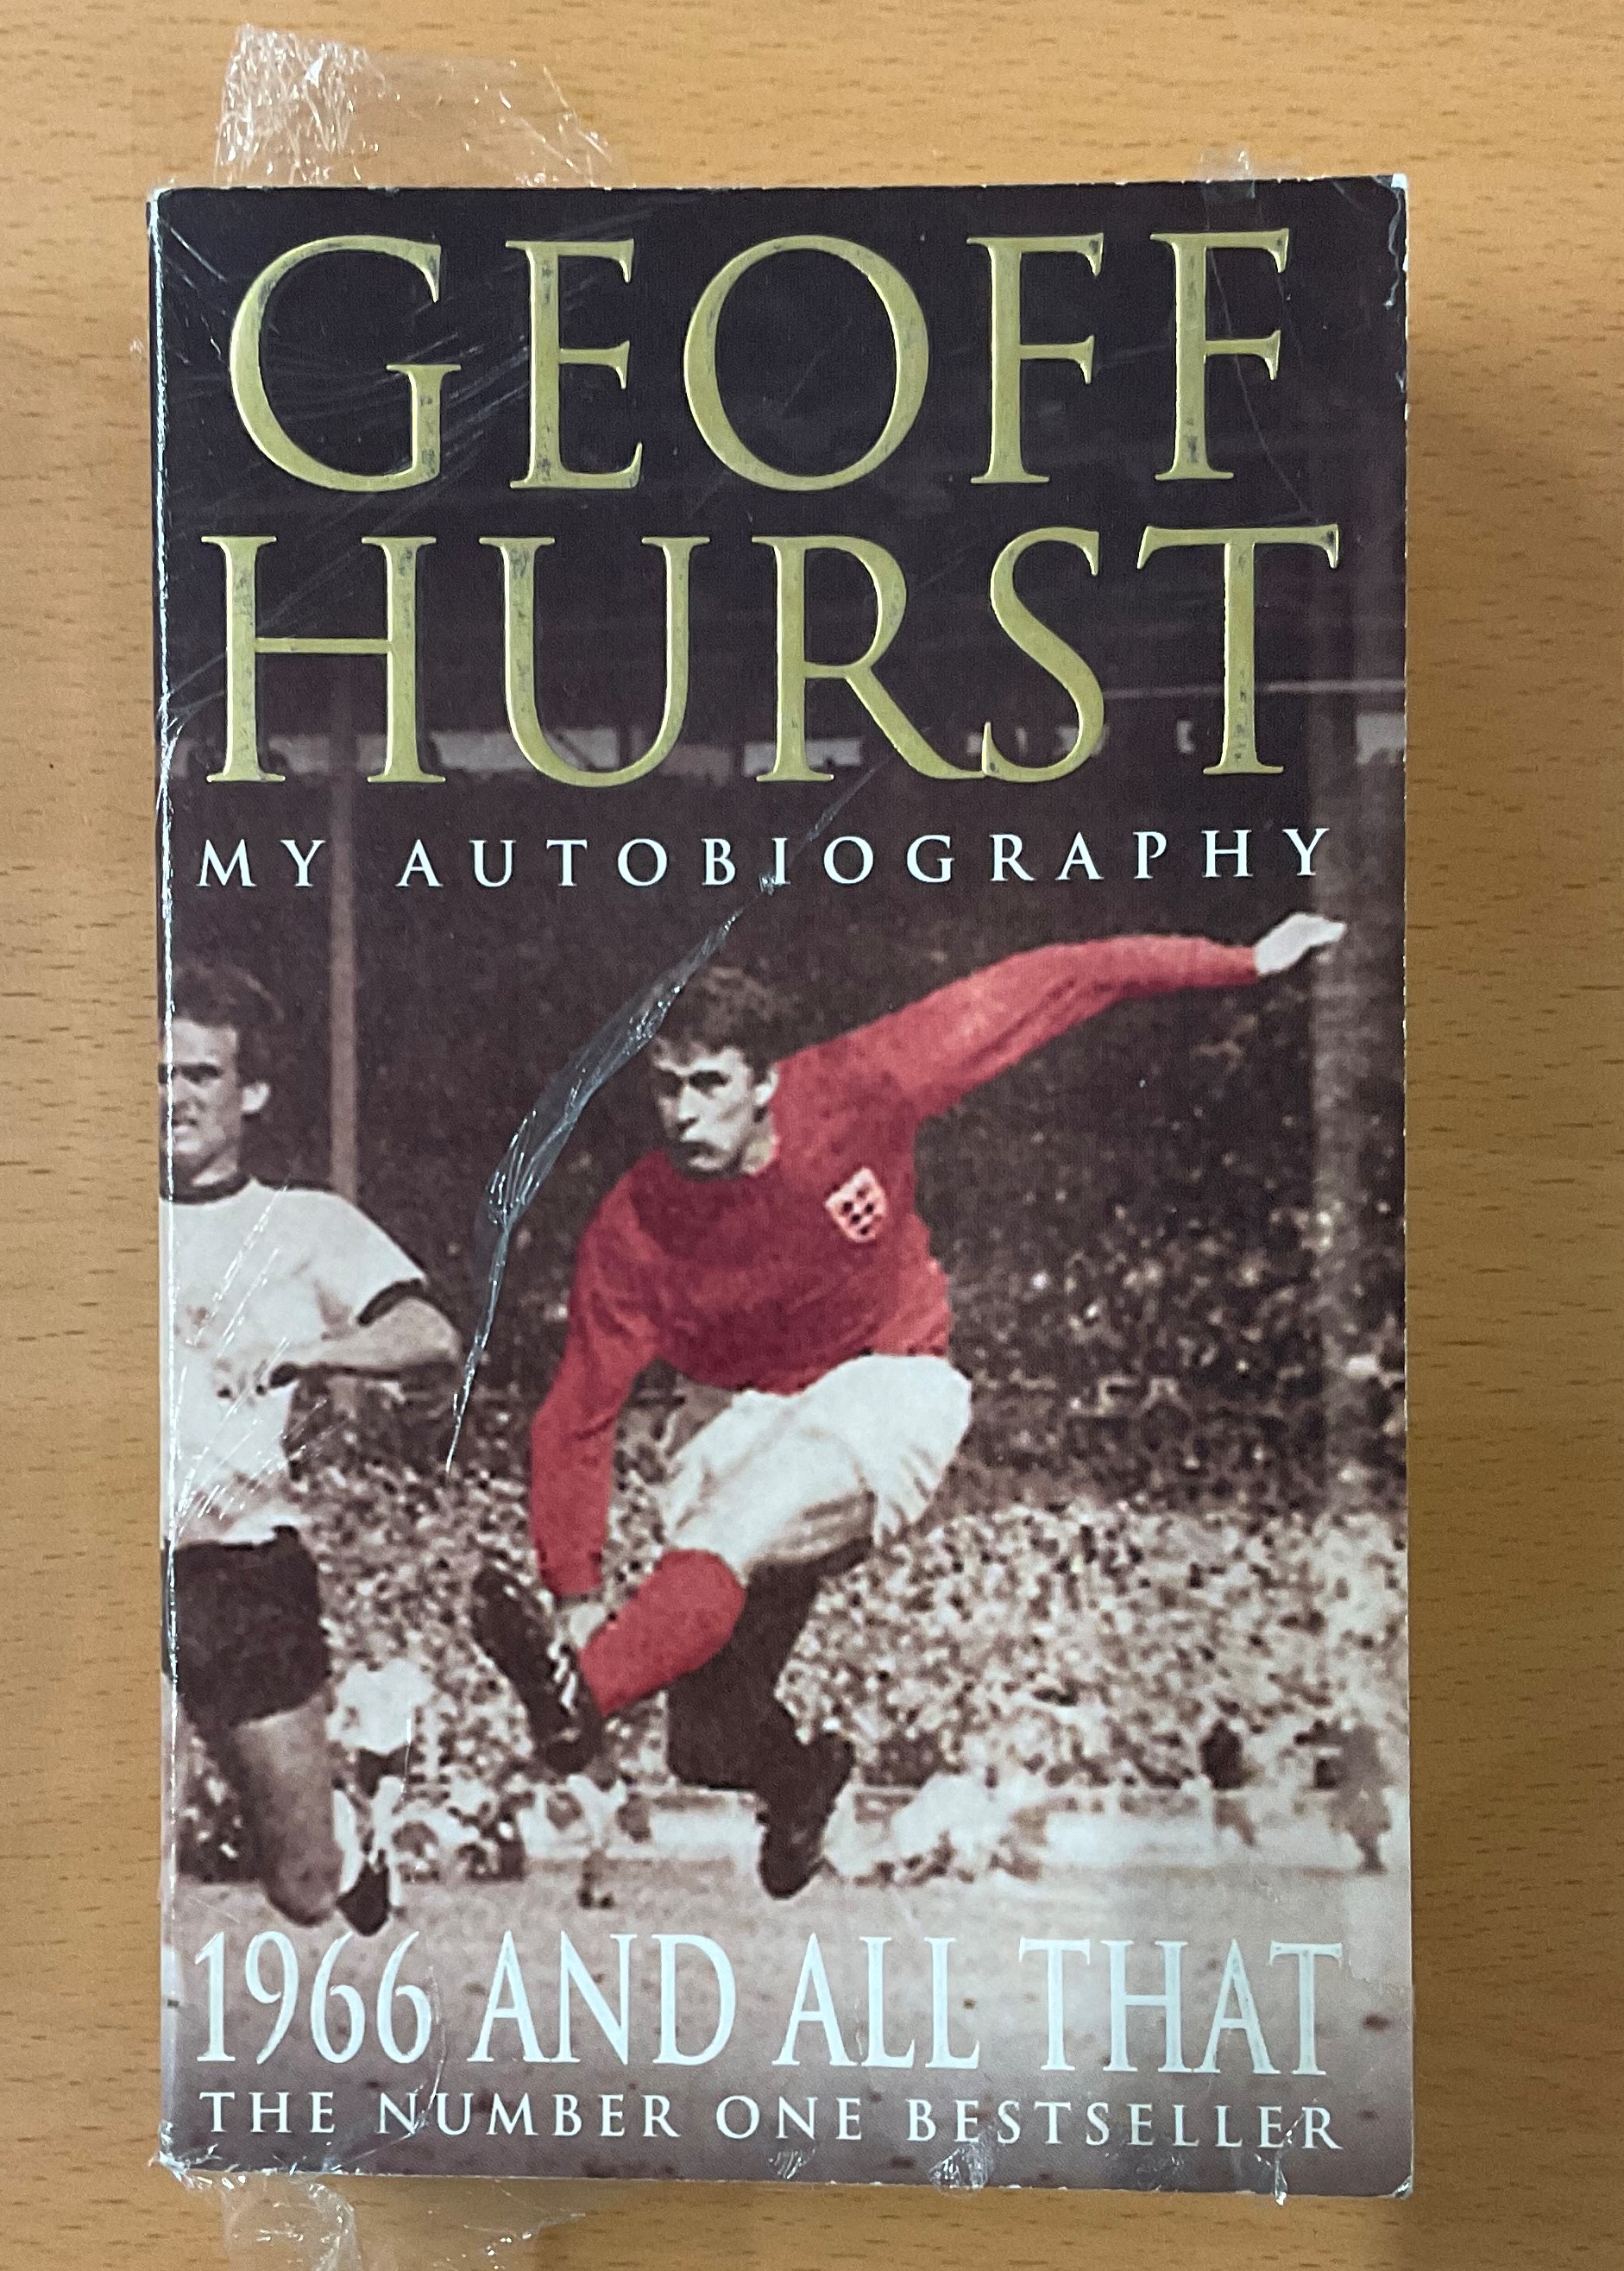 Football Legend Sir Geoff Hurst Personally Signed Paperback Book Titled Geoff Hurst- My